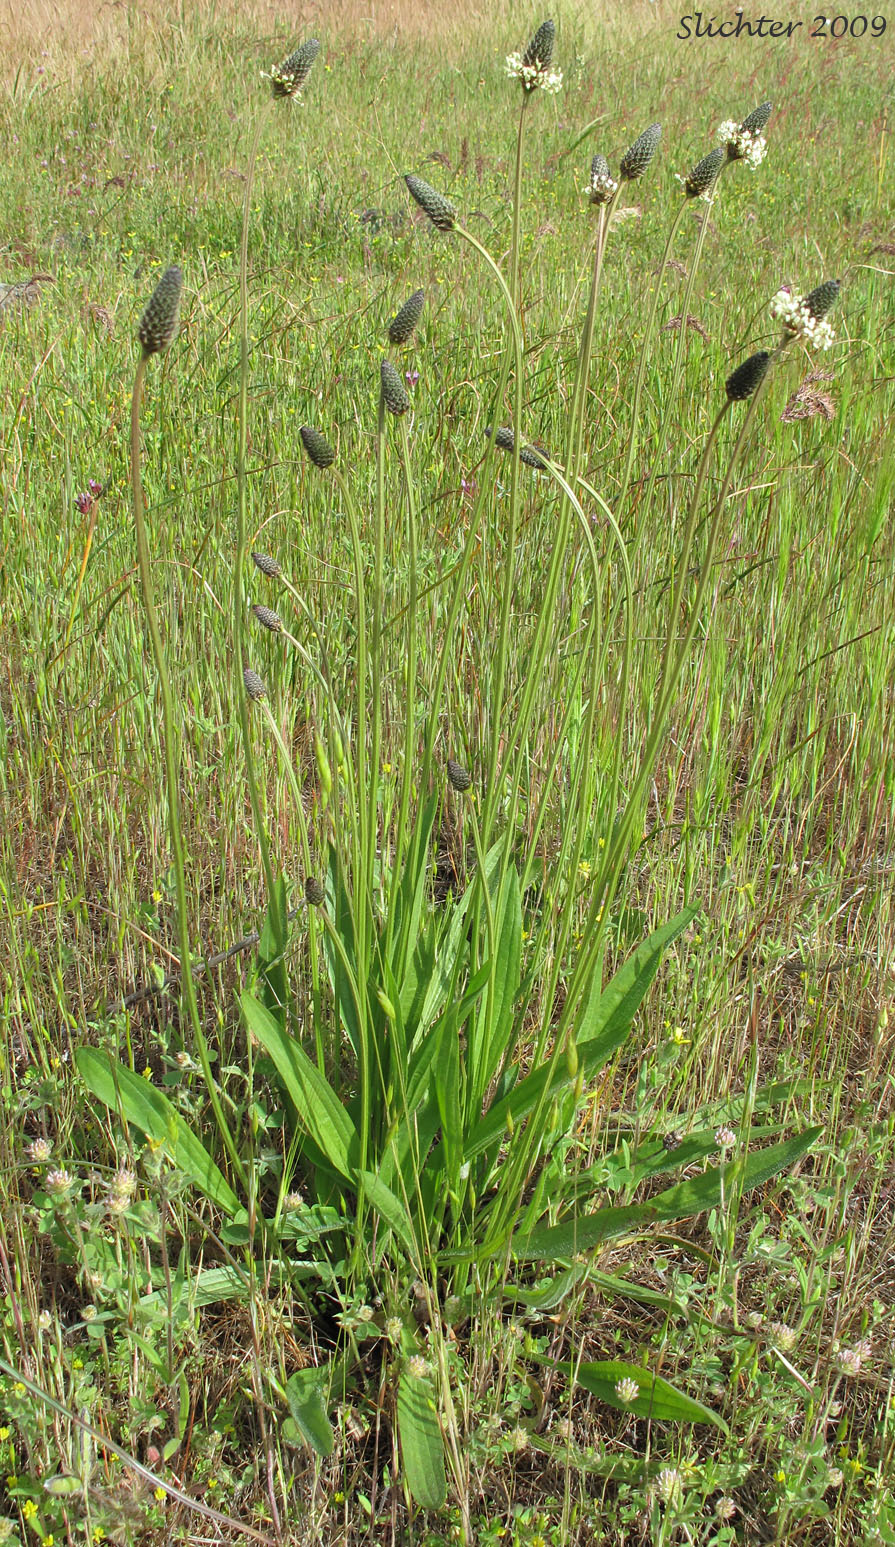 Buckhorn Plantain, English Plantain, Narrowleaf Plantain: Plantago lanceolata (Synonyms: Plantago altissima, Plantago lanceolata var. sphaerostachya)